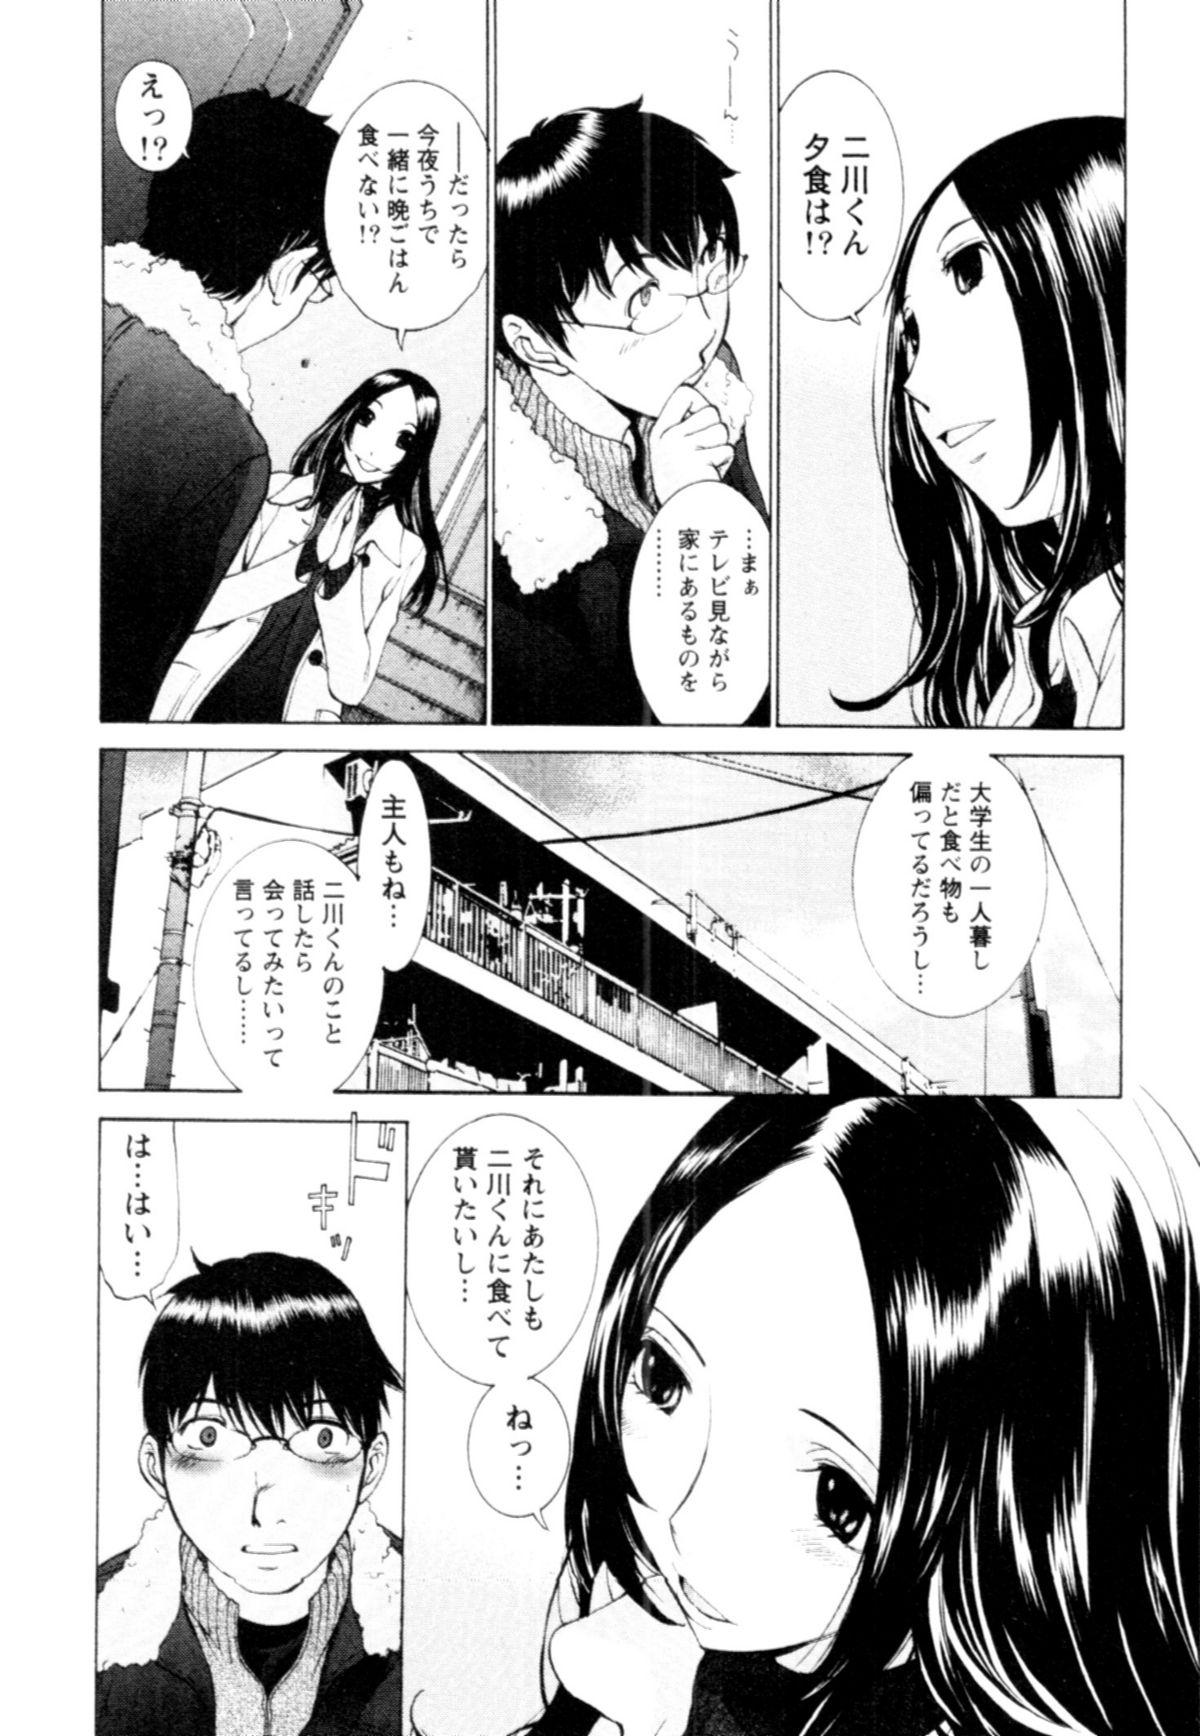 Nalgas Momoiro Danchi no Nichijyou Teenpussy - Page 9